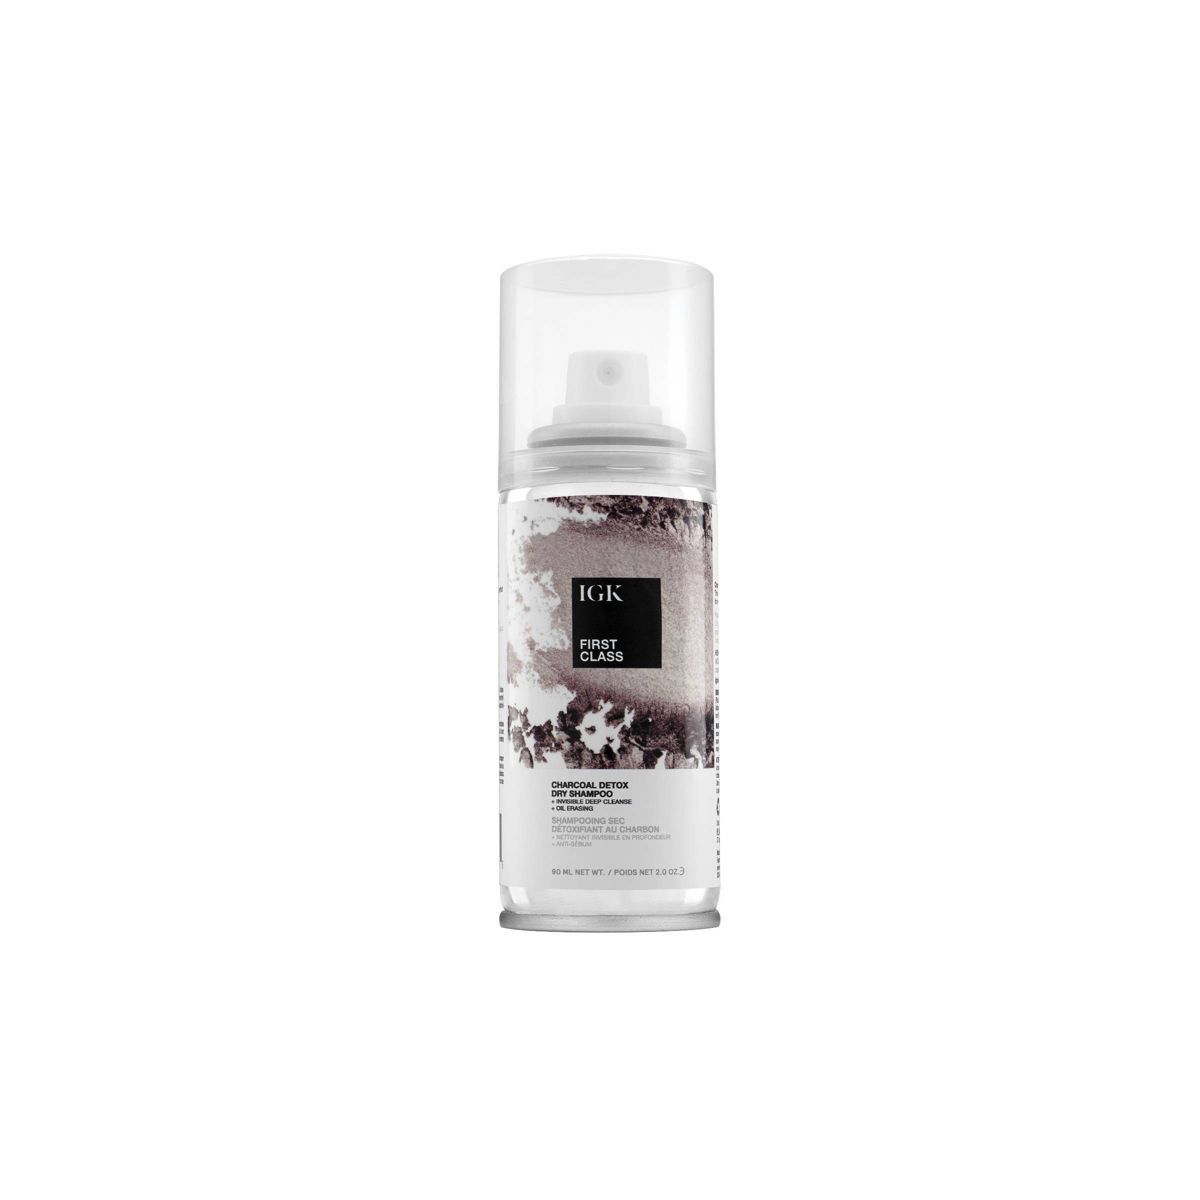 IGK First Class Charcoal Detox Dry Shampoo - Travel Size - 2oz - Ulta Beauty | Target